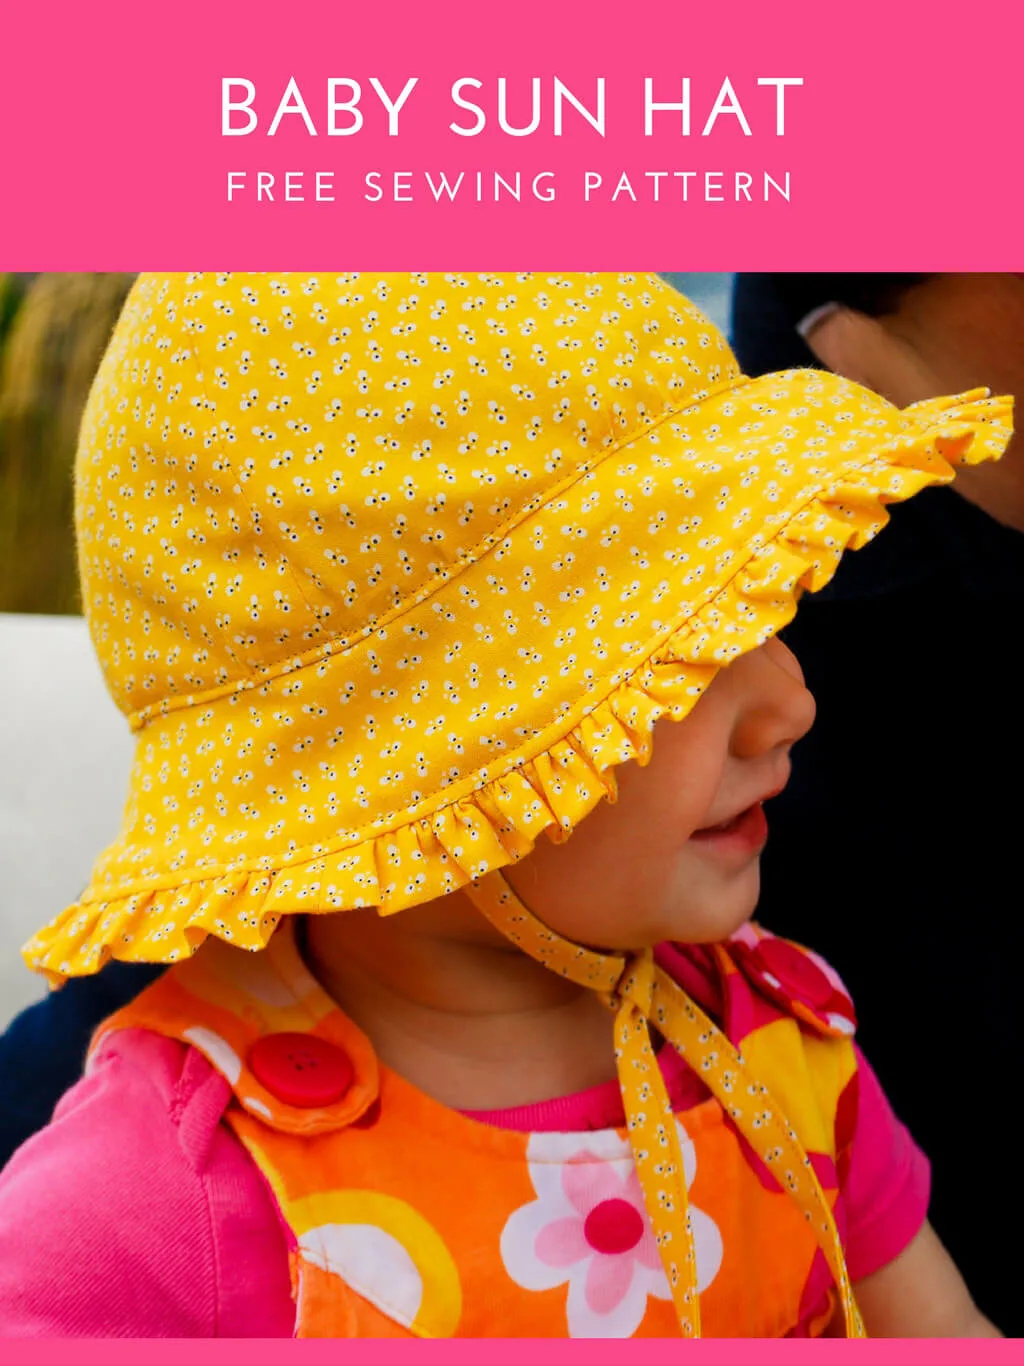 Baby bonnet free pattern sewing pattern